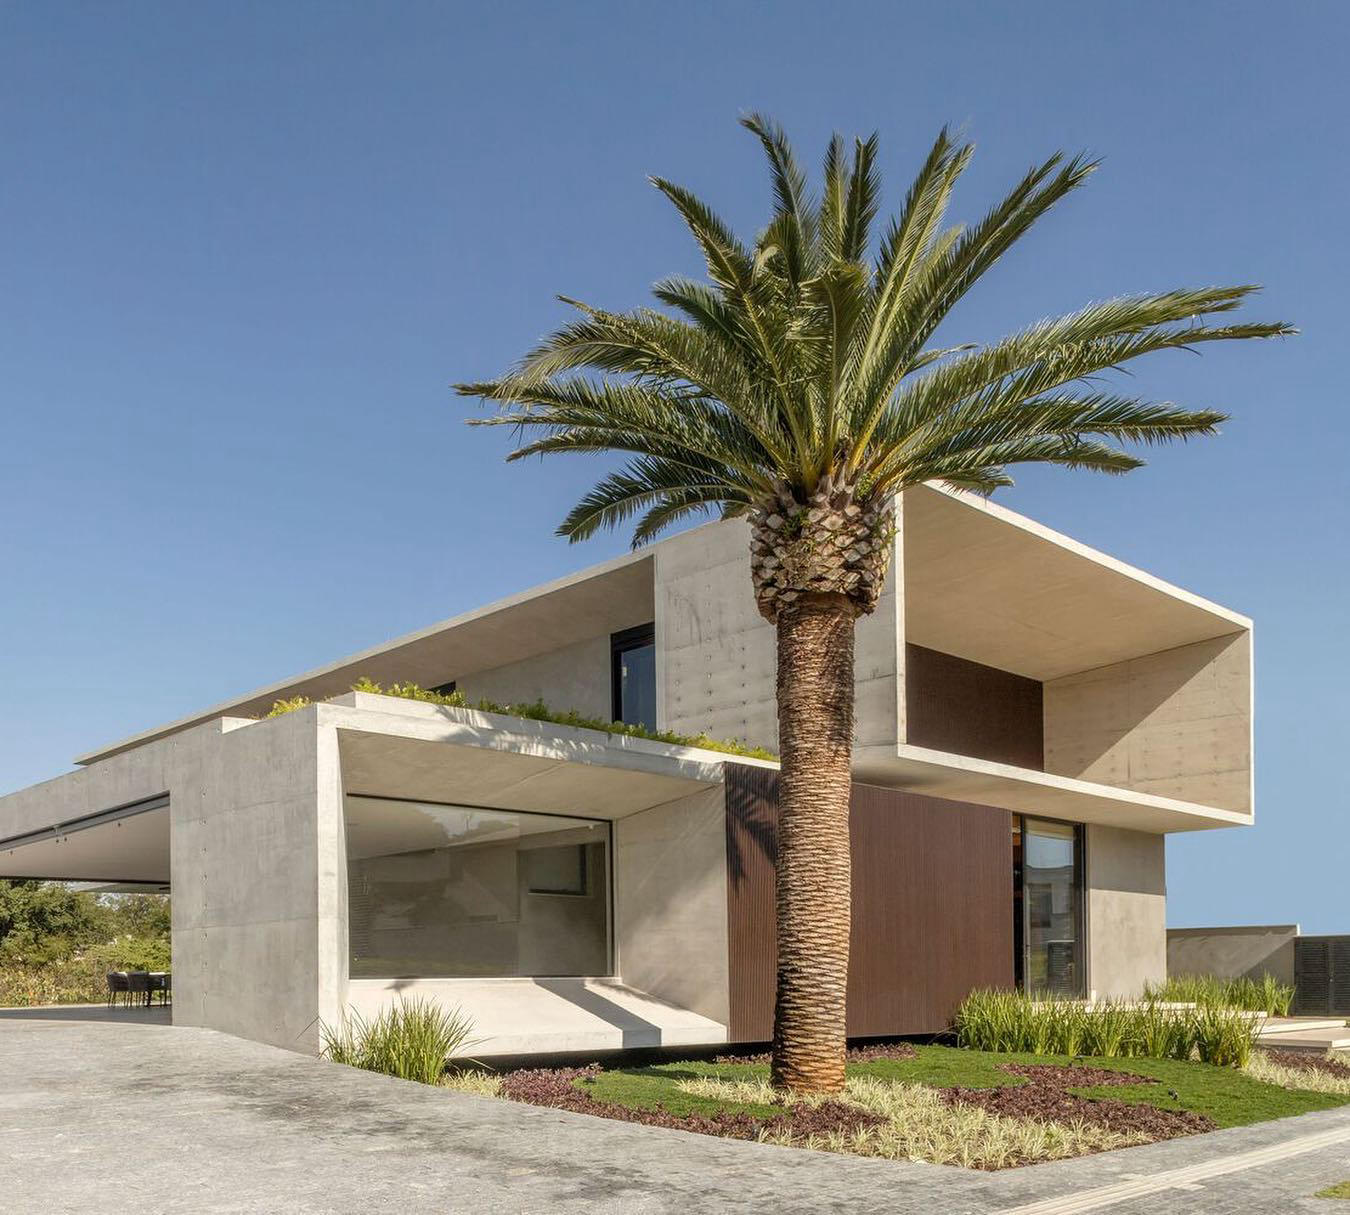 TP HOUSE designed by Leo Romano #leoromanoarquitetura, located in #jardinsmunique, #Brazil and photo